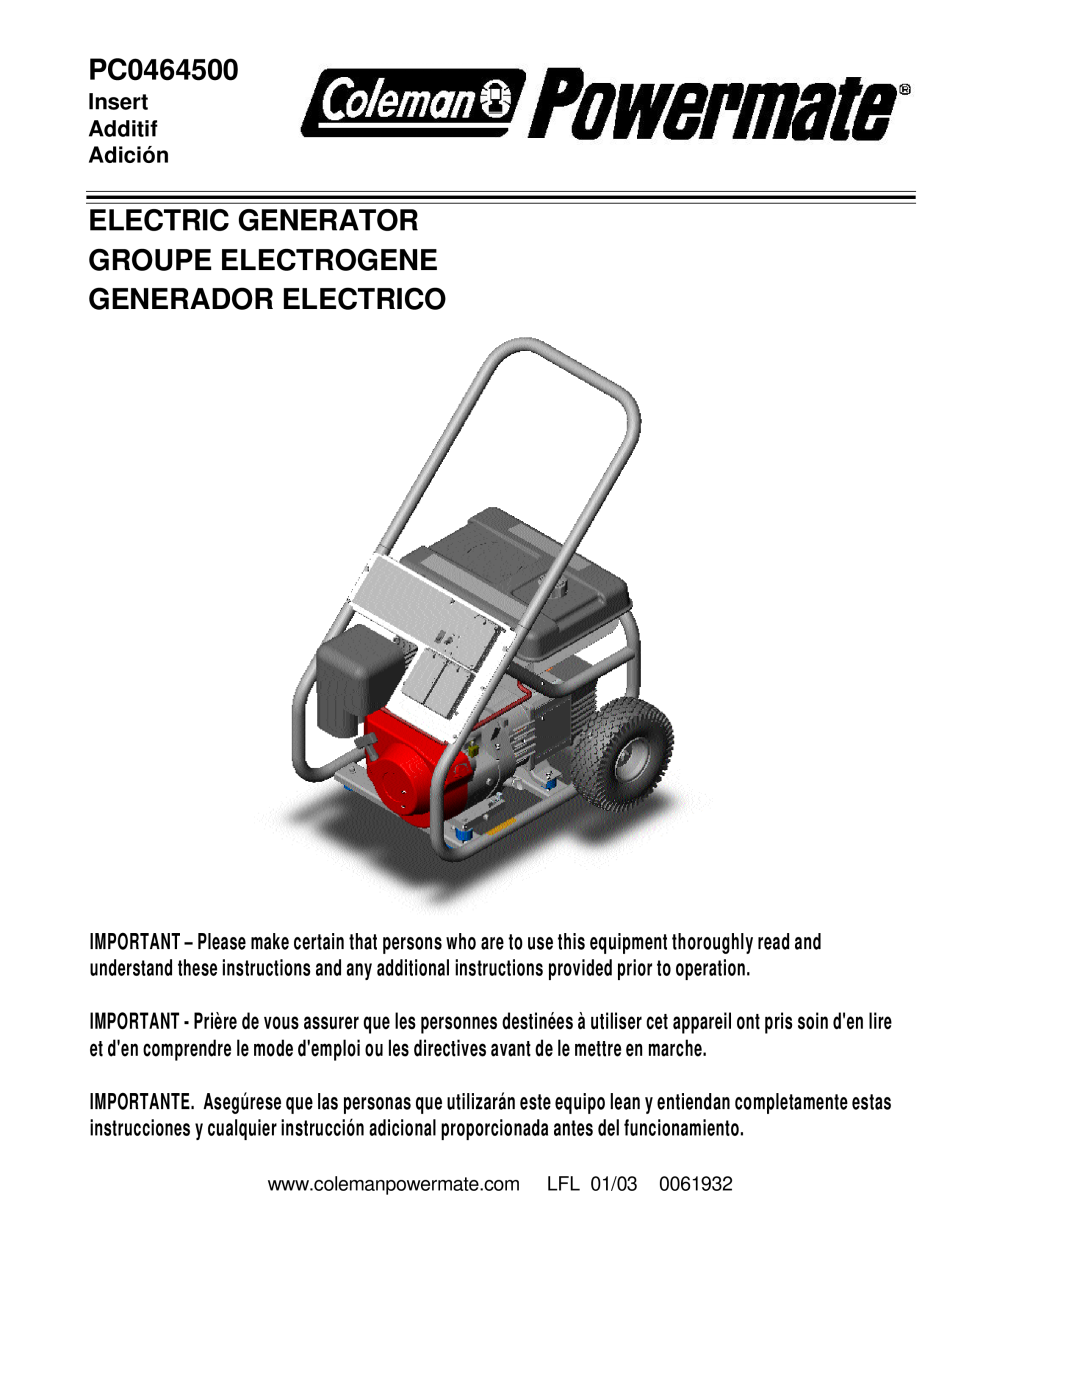 Powermate PC0464500 manual Electric Generator Groupe Electrogene, Generador Electrico, Insert Additif Adición 